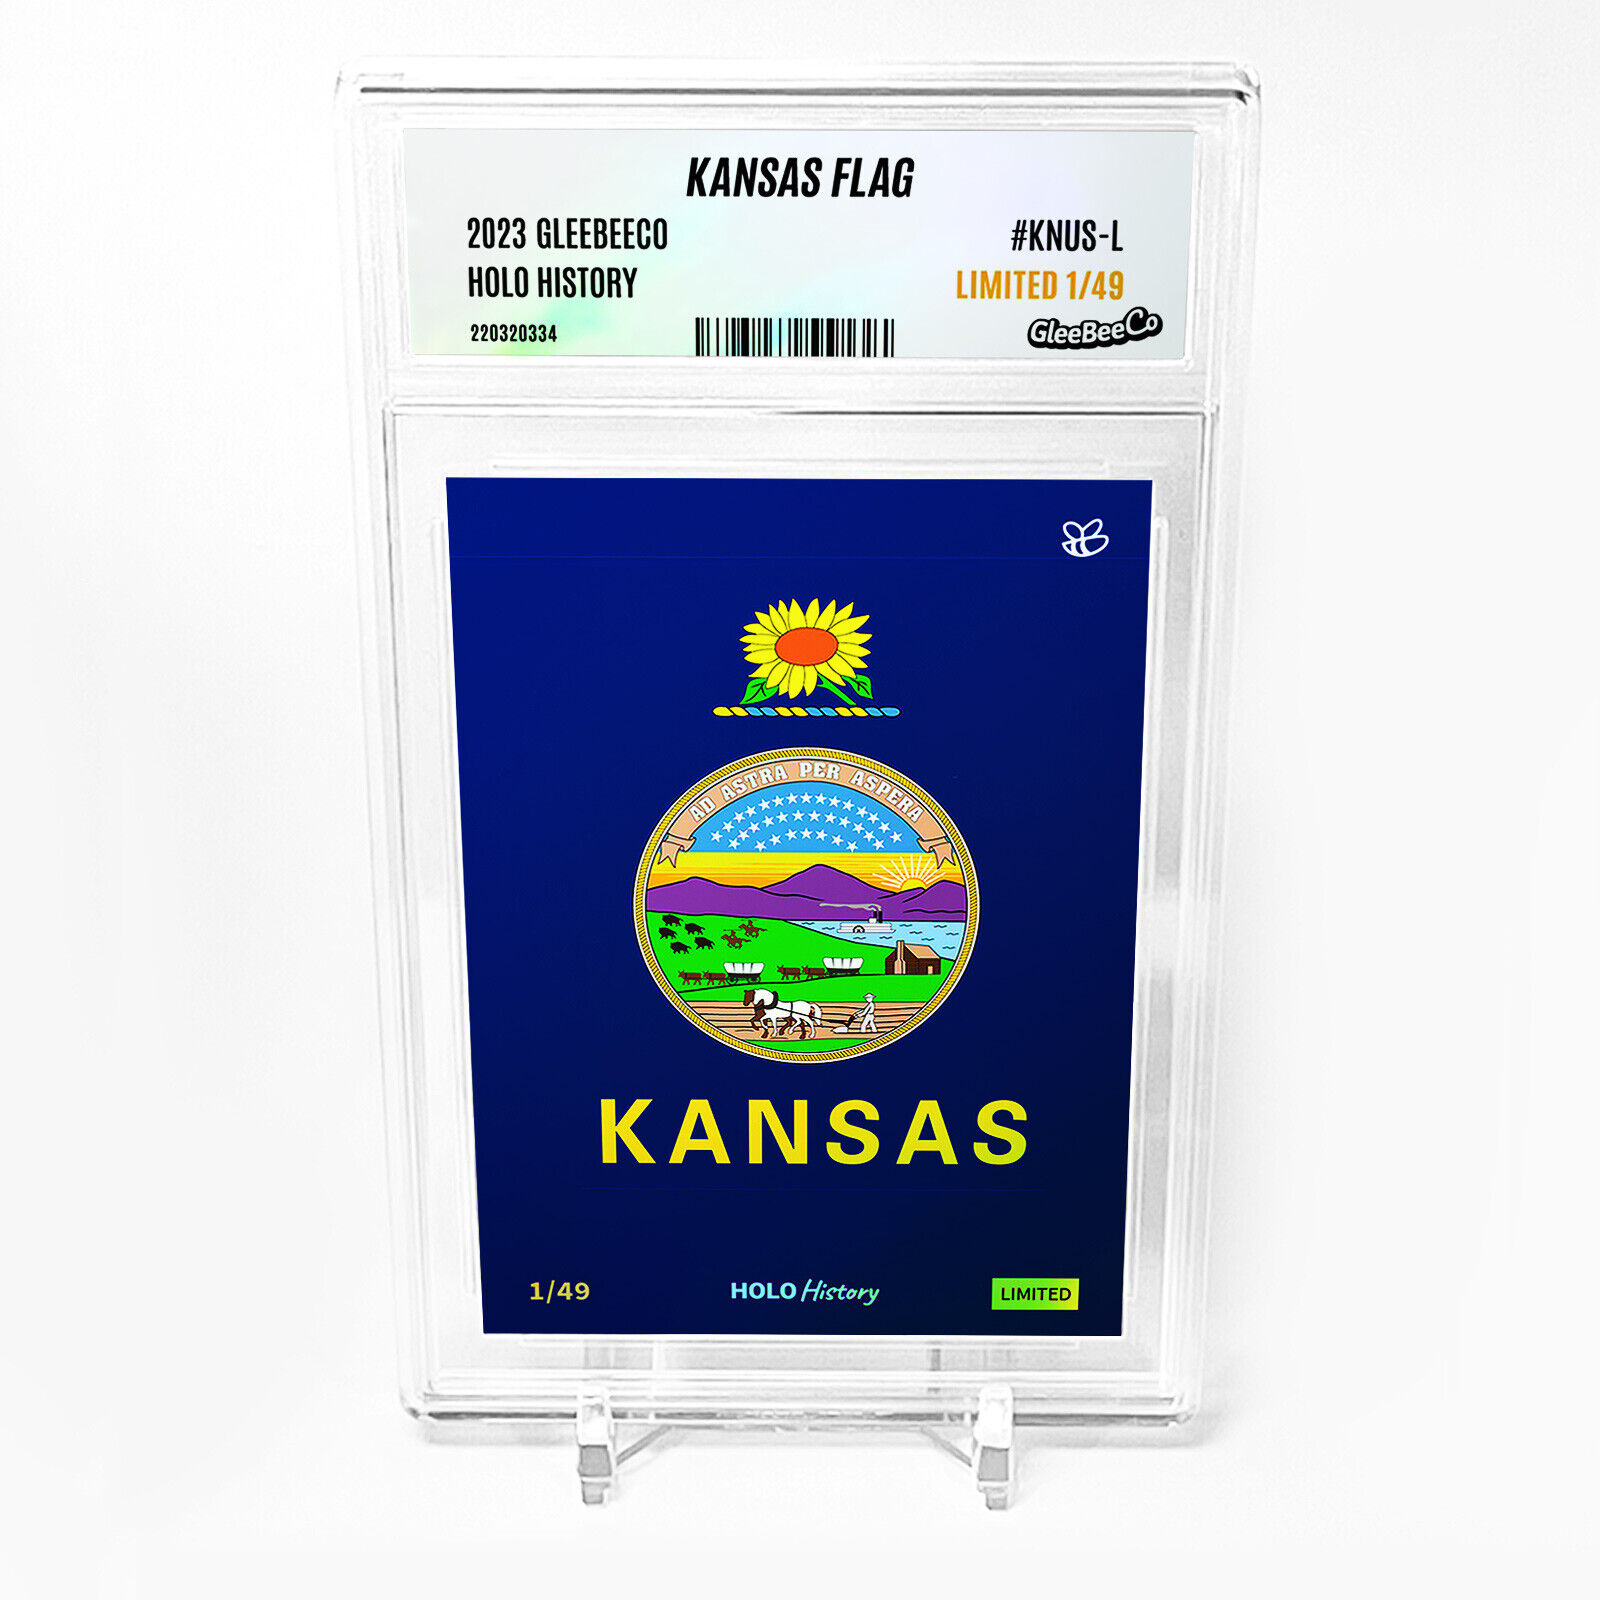 KANSAS FLAG Card 2023 GleeBeeCo Holo History Slabbed #KNUS-L Only /49